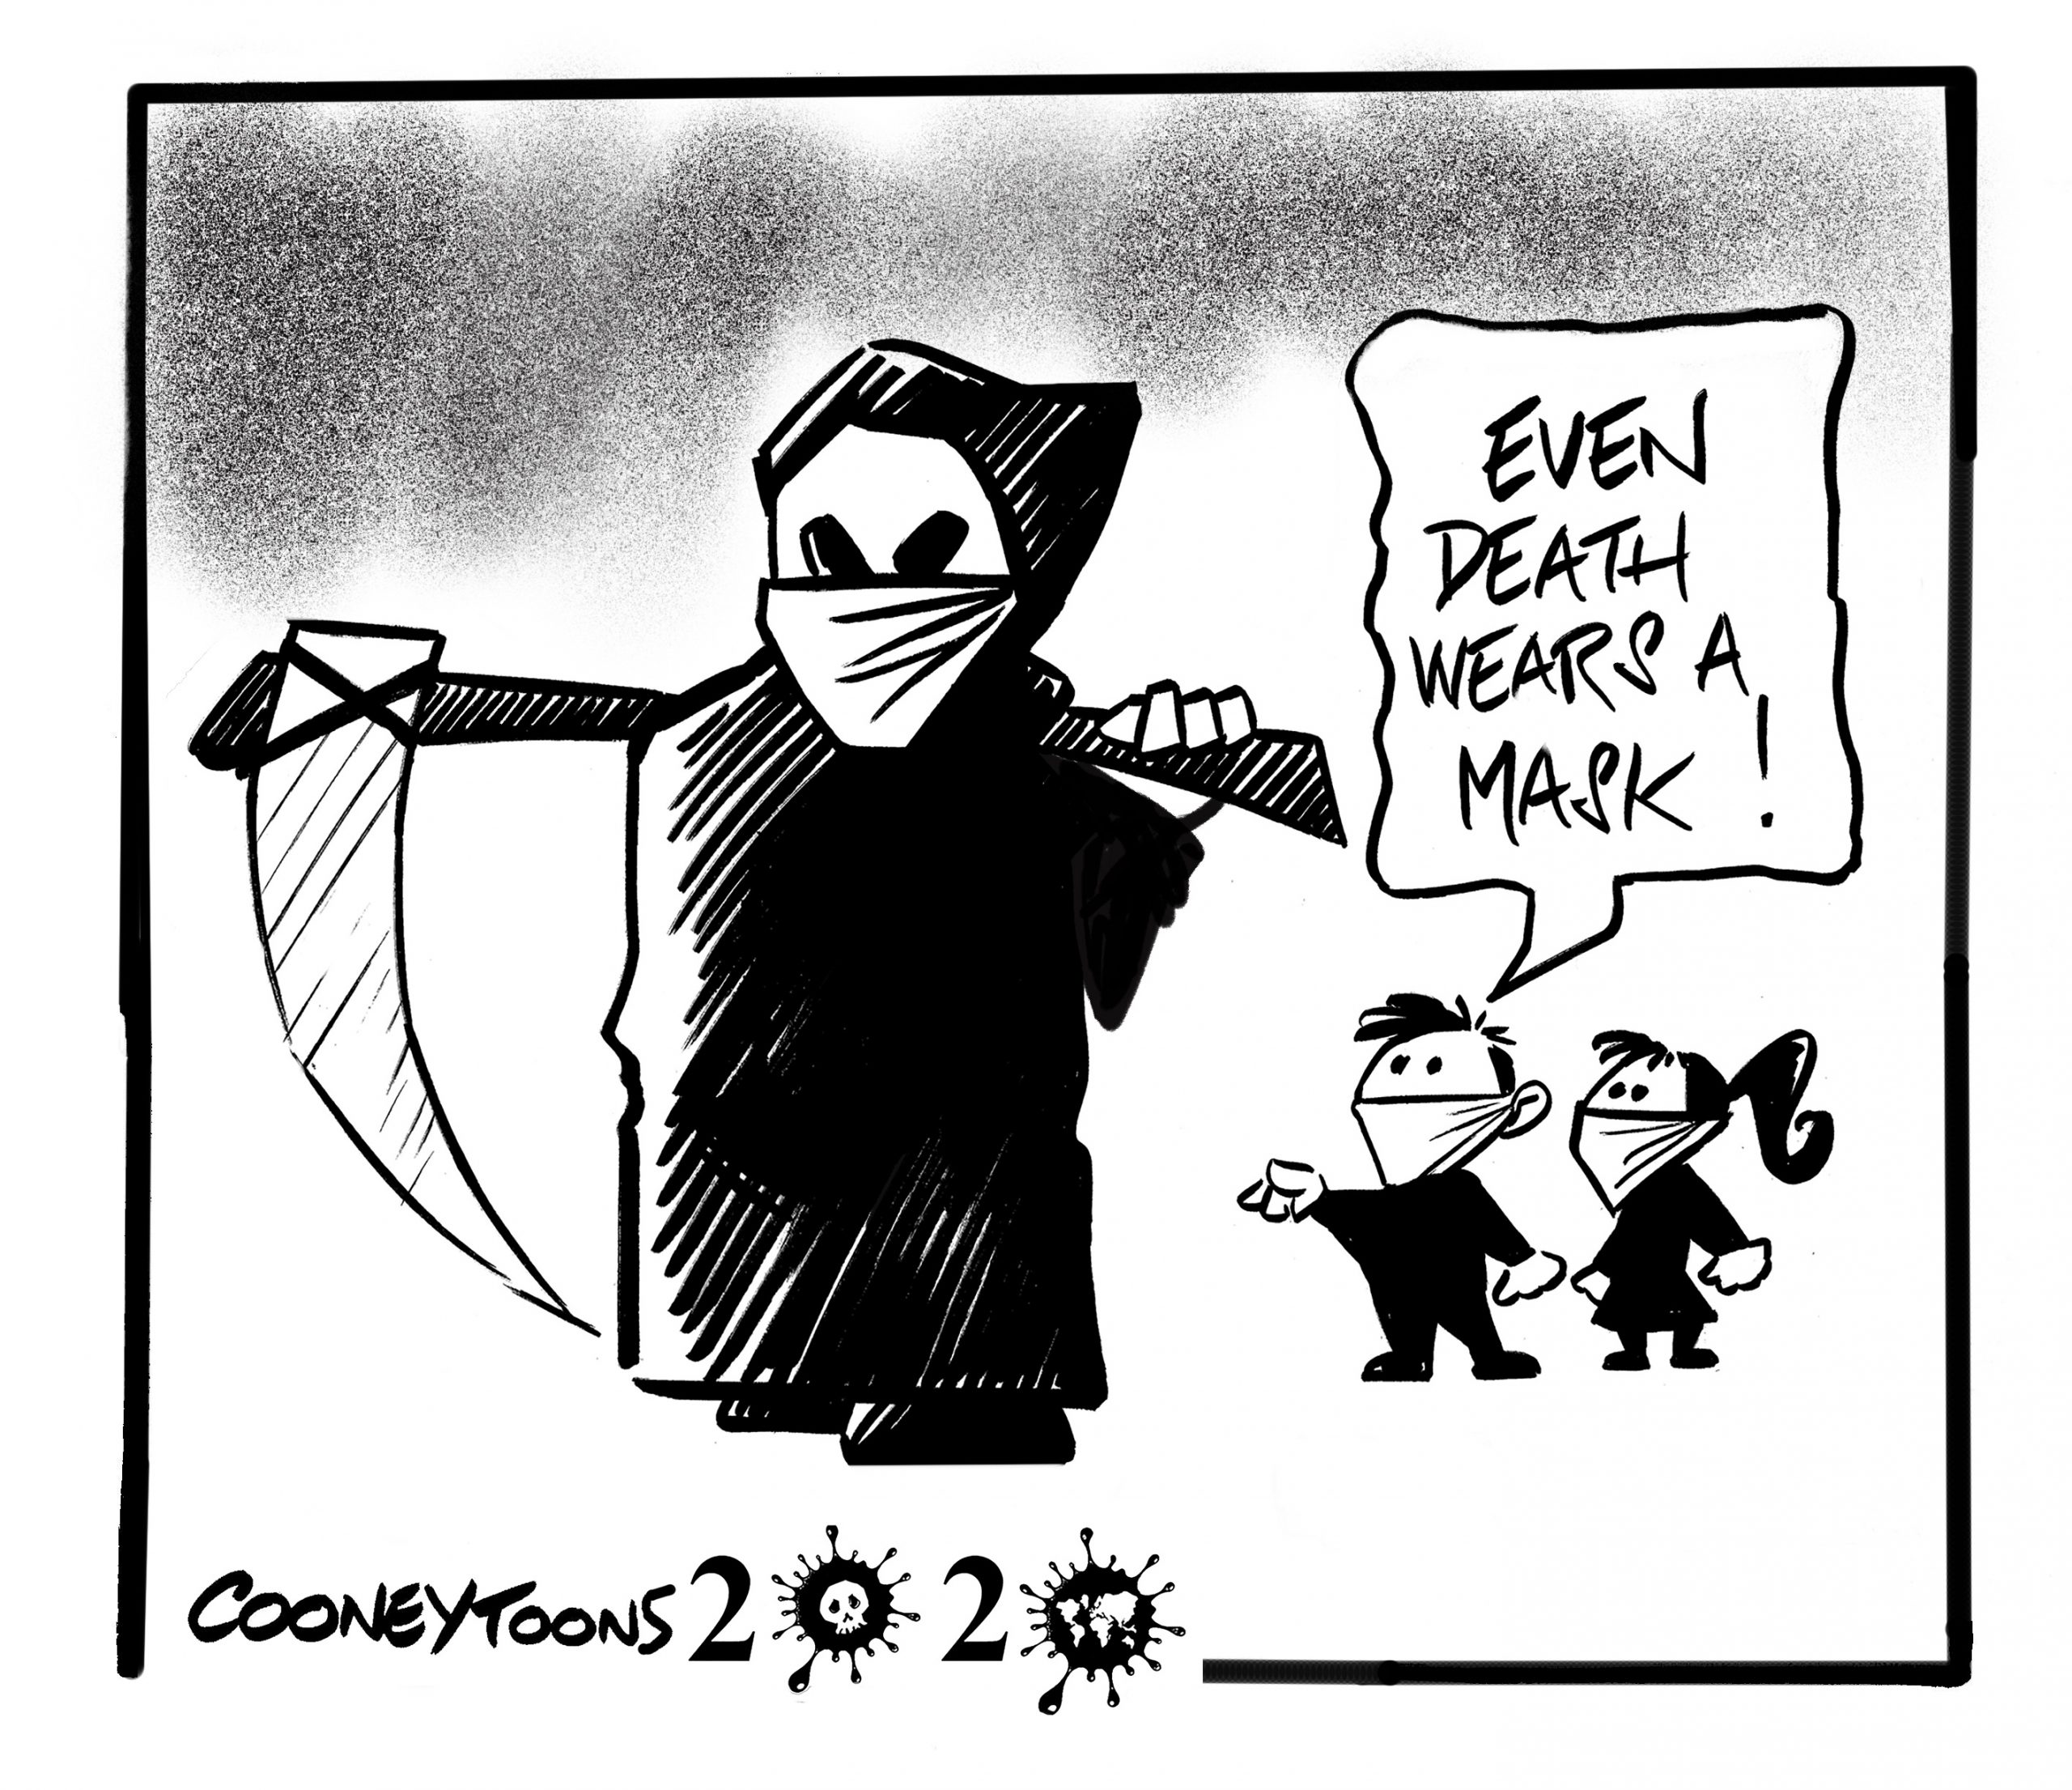 Even Death wears a Mask !